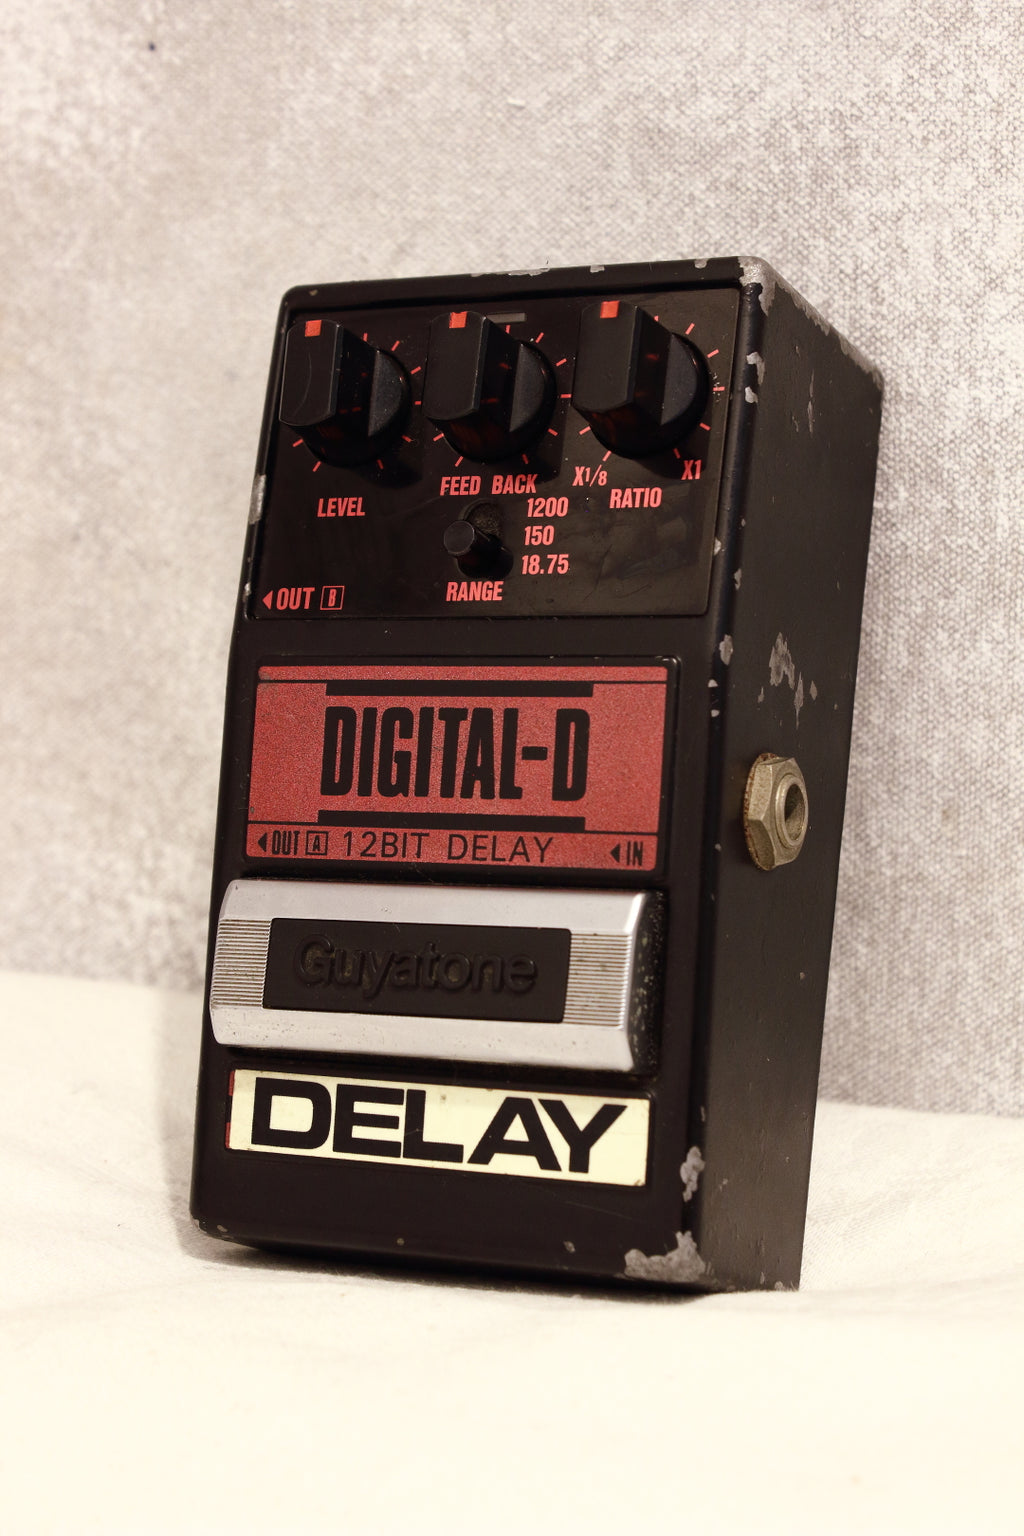 Guyatone PS-029 Digital-D 12-bit Delay Pedal